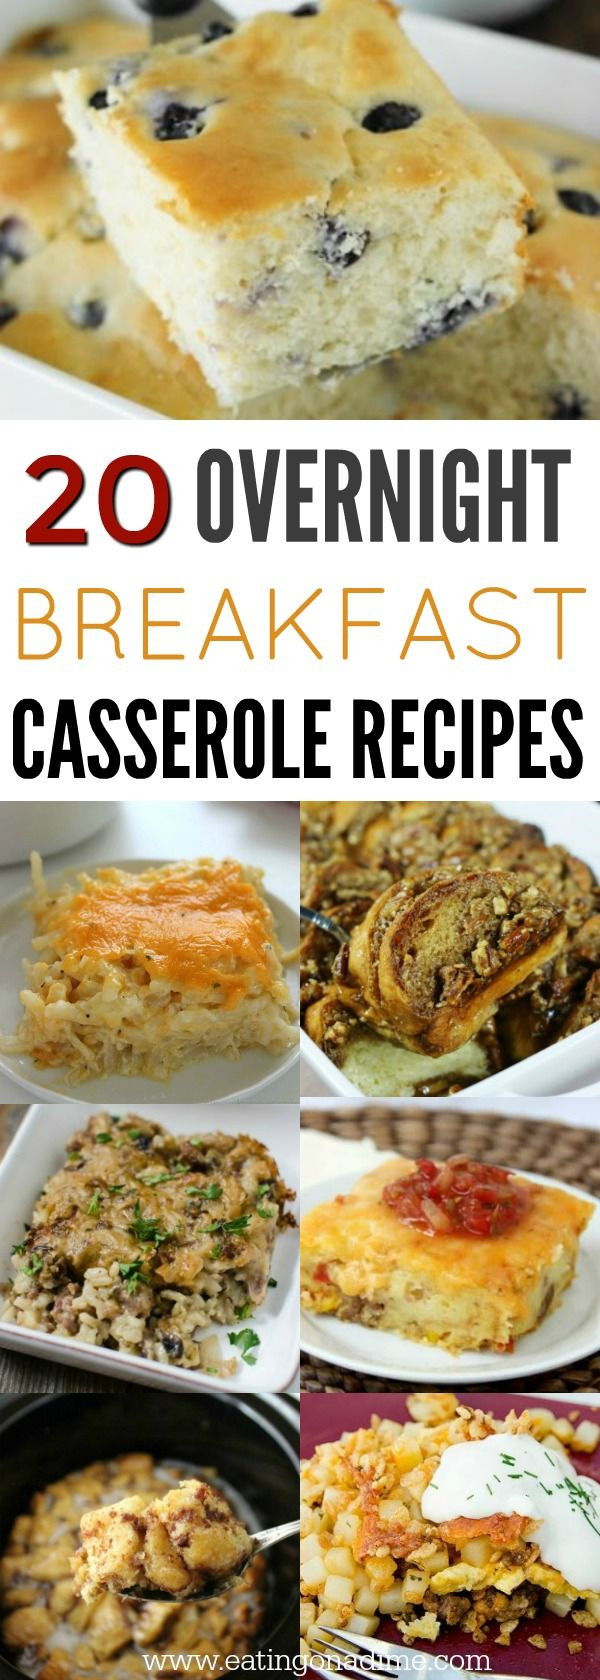 Tasty Breakfast Recipes
 Tasty Make ahead breakfast recipes on Pinterest